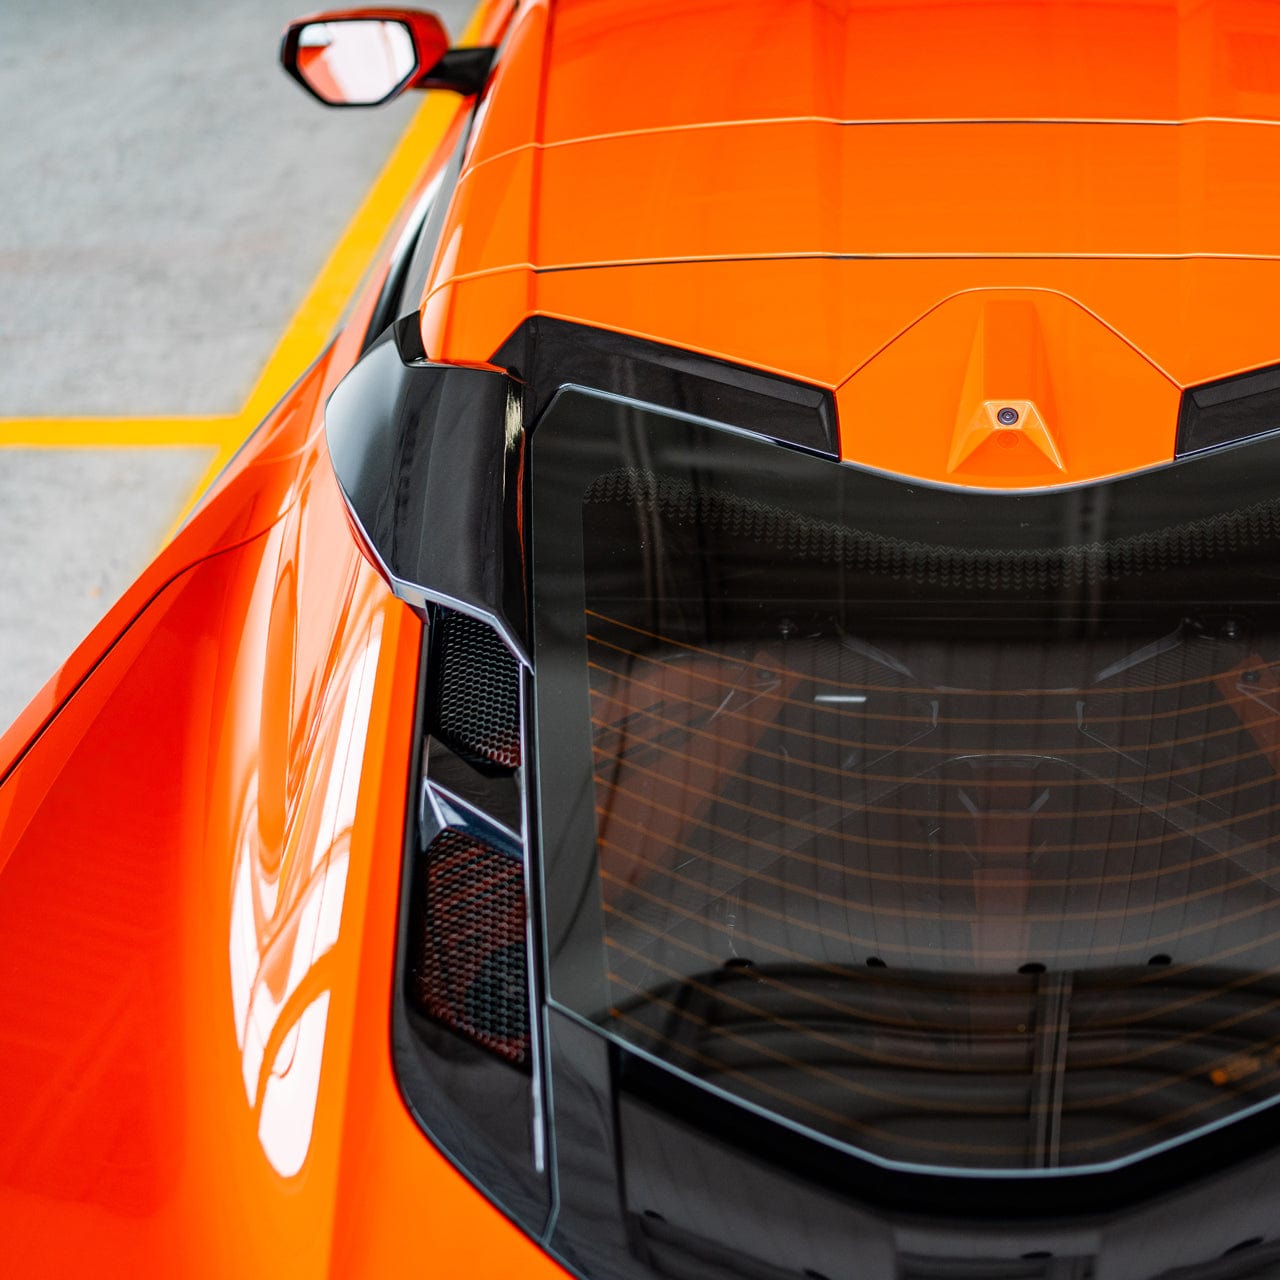 Top-down view of a Carbon Flash Metallic Black ACS C8 RQ Intake Port installed on a Sebring Orange C8 Corvette